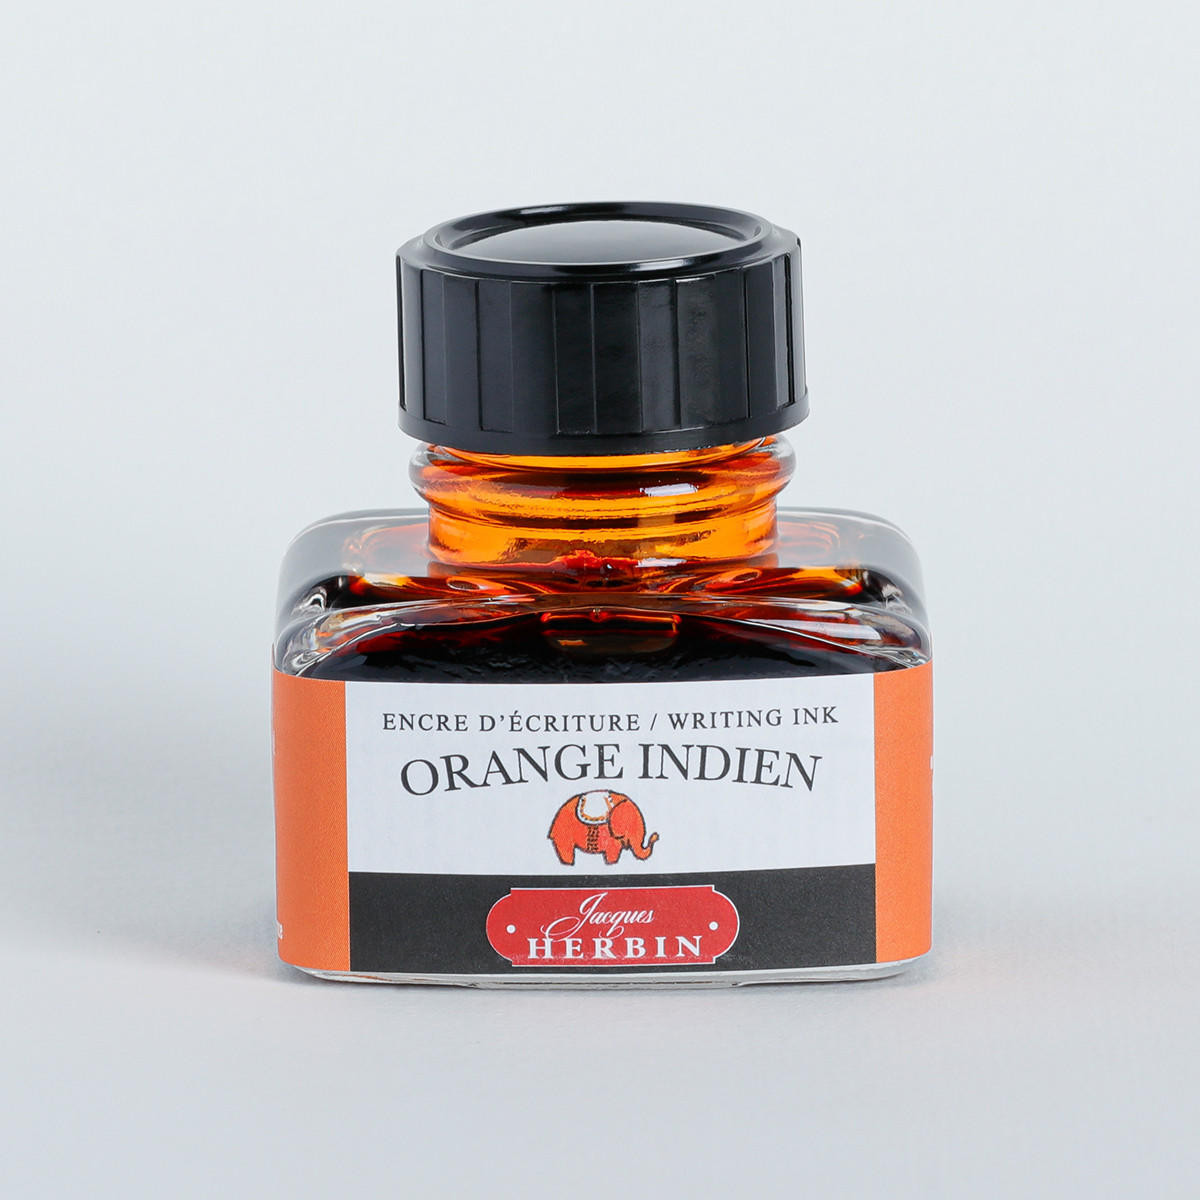 Herbin ’D’ Writing and Drawing Ink 30ml Orange Indien